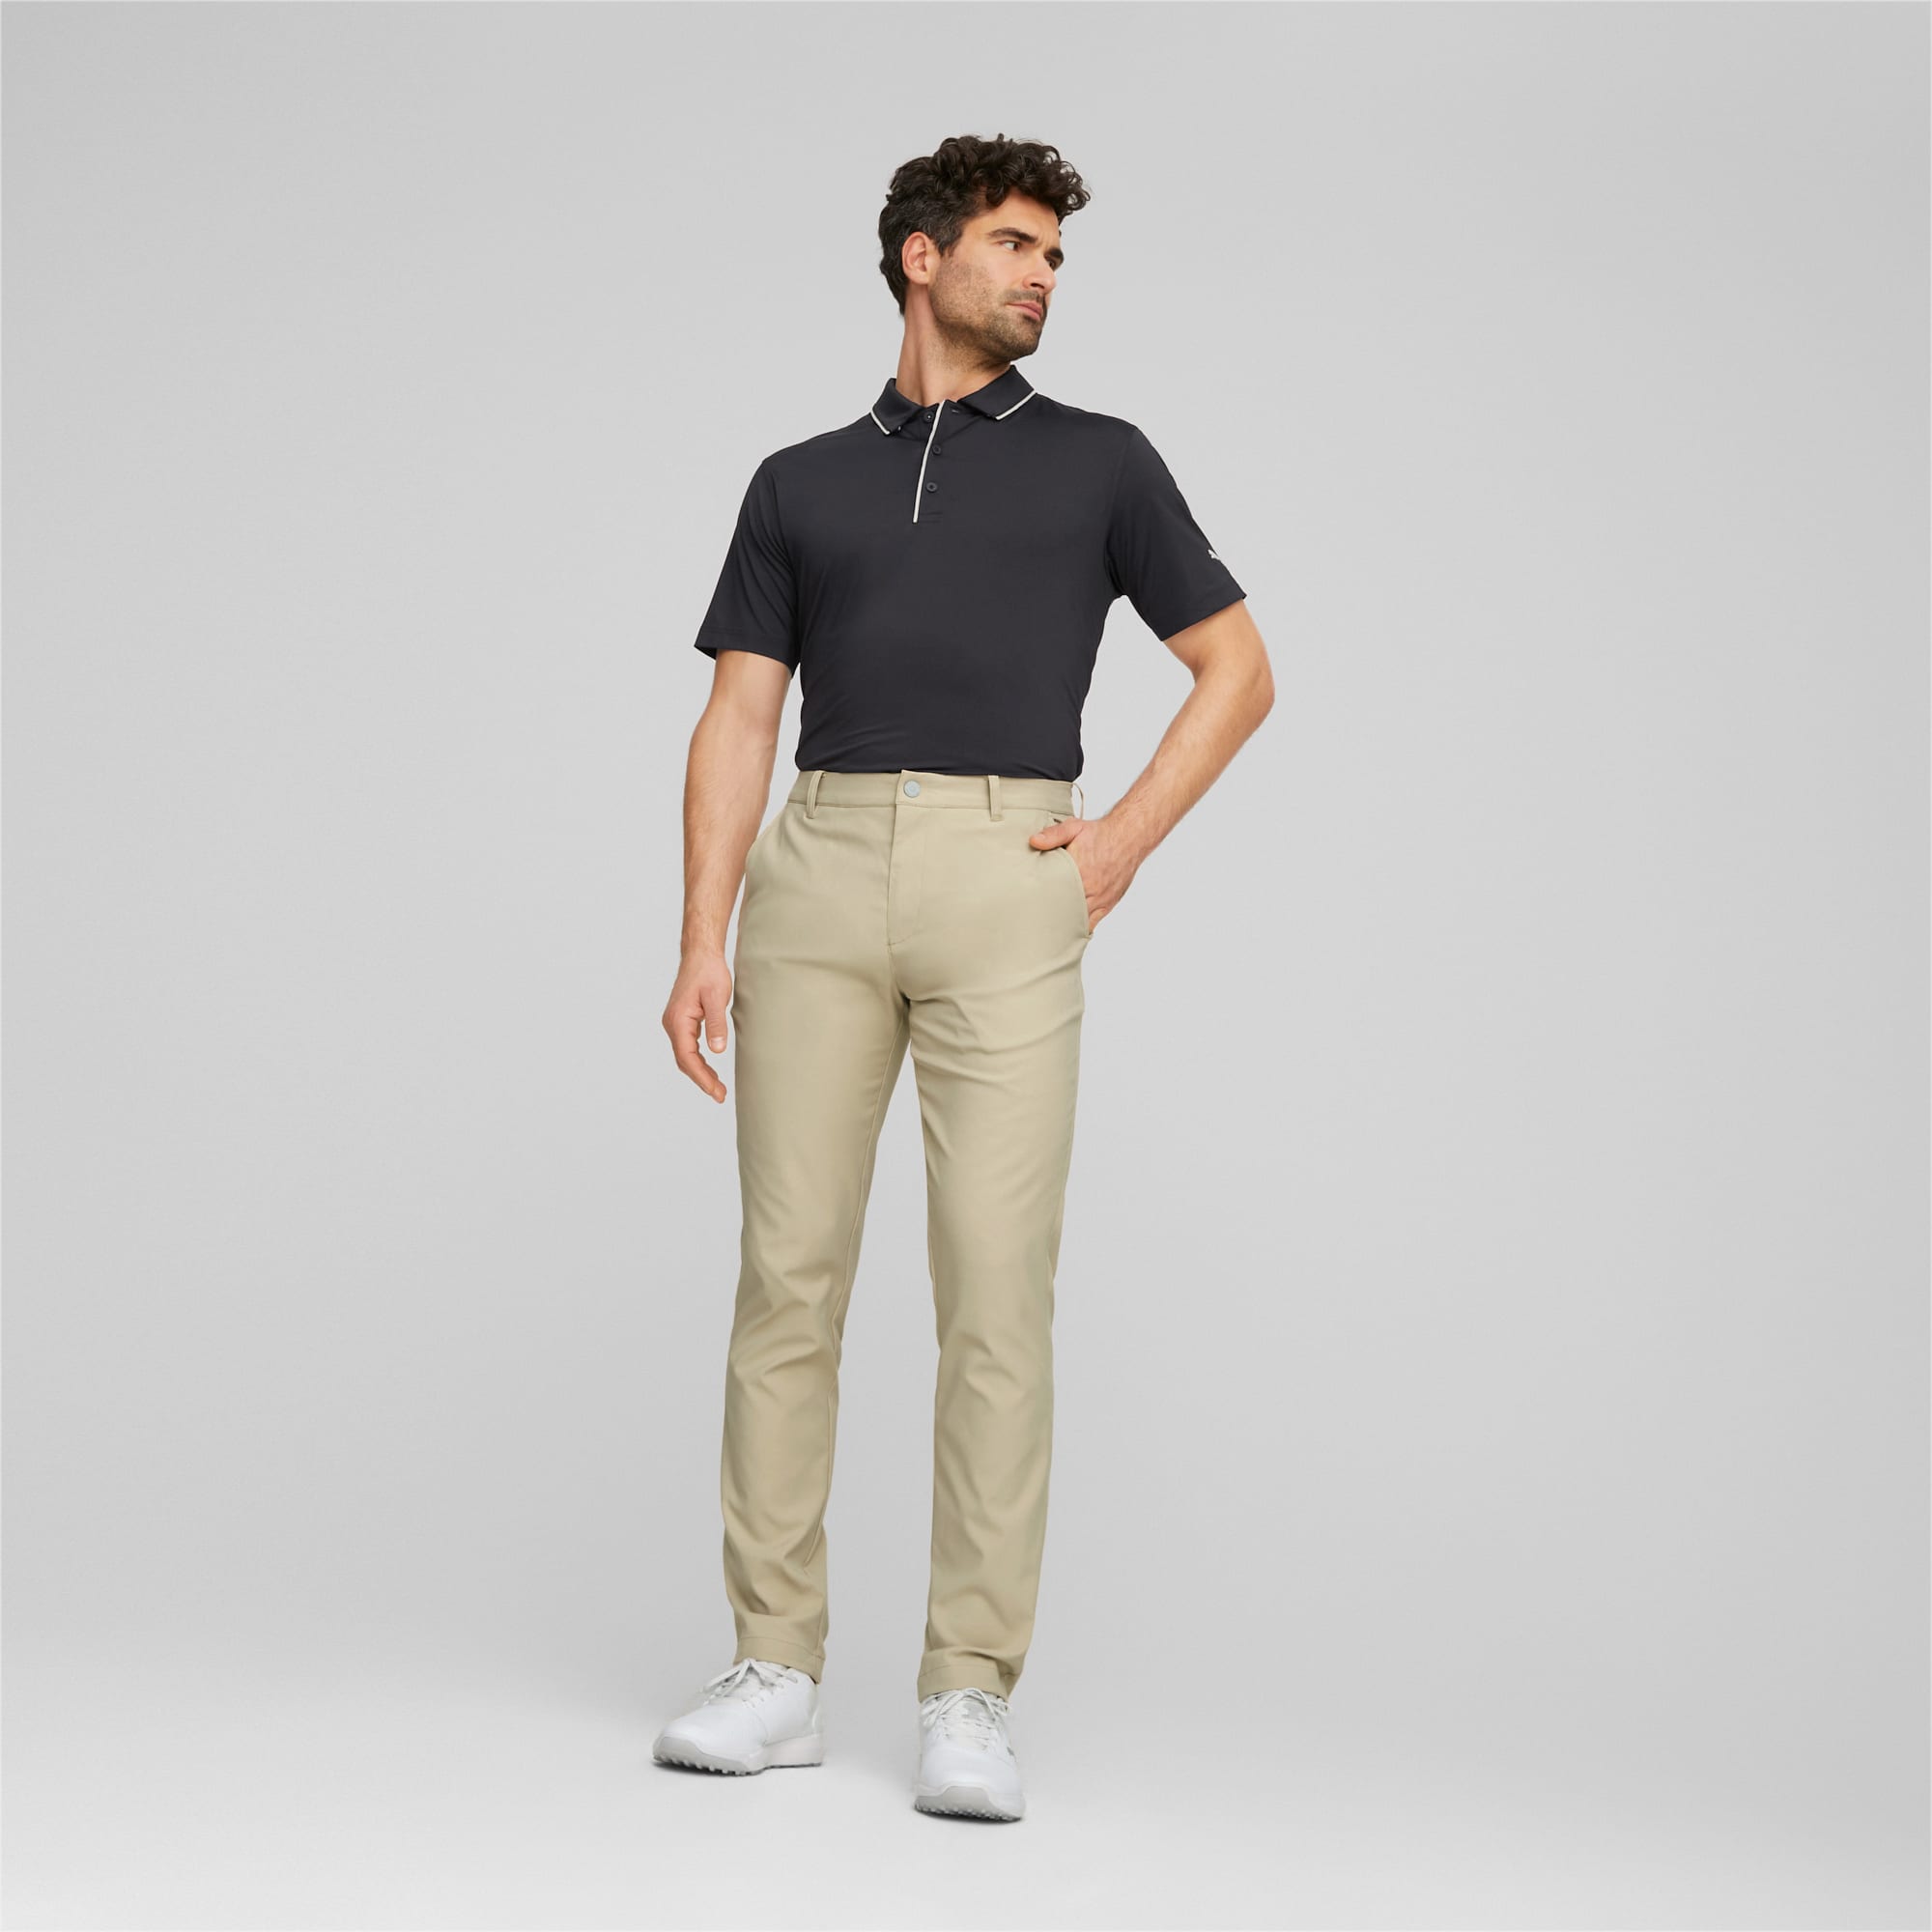 PUMA Dealer Tailored Golf Pants Men, Alabaster, Size 34/36, Clothing